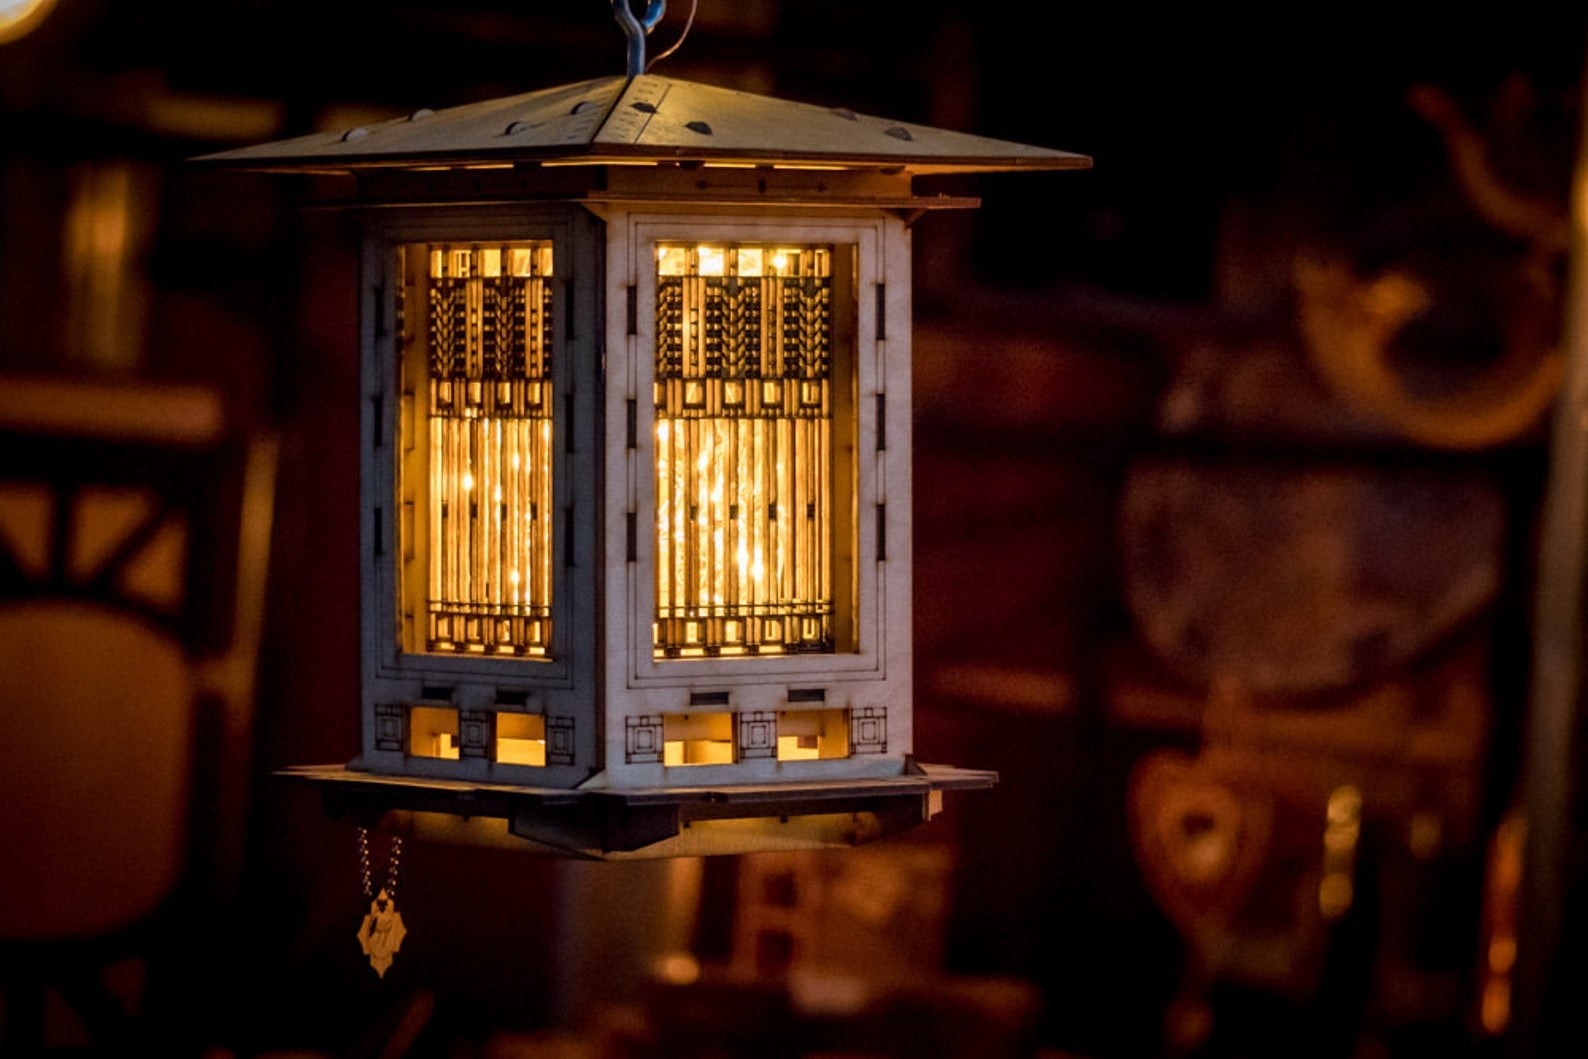 A wooden birdhouse with illuminated windows at night